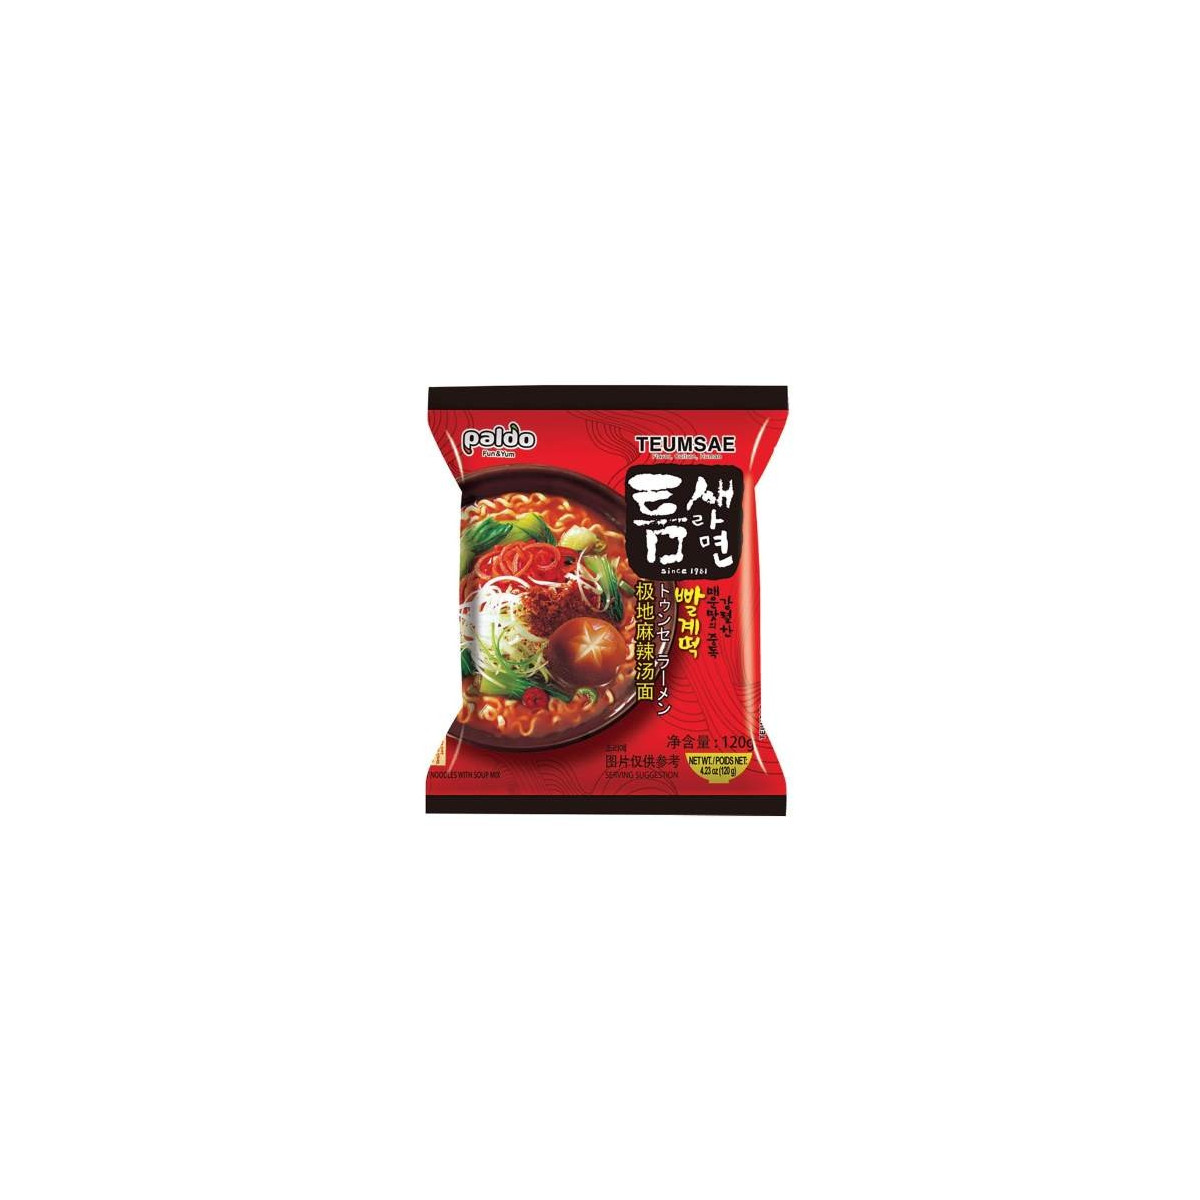 Instant Noodles Teumsae Ramyun Hot&Spicy 120g - Paldo